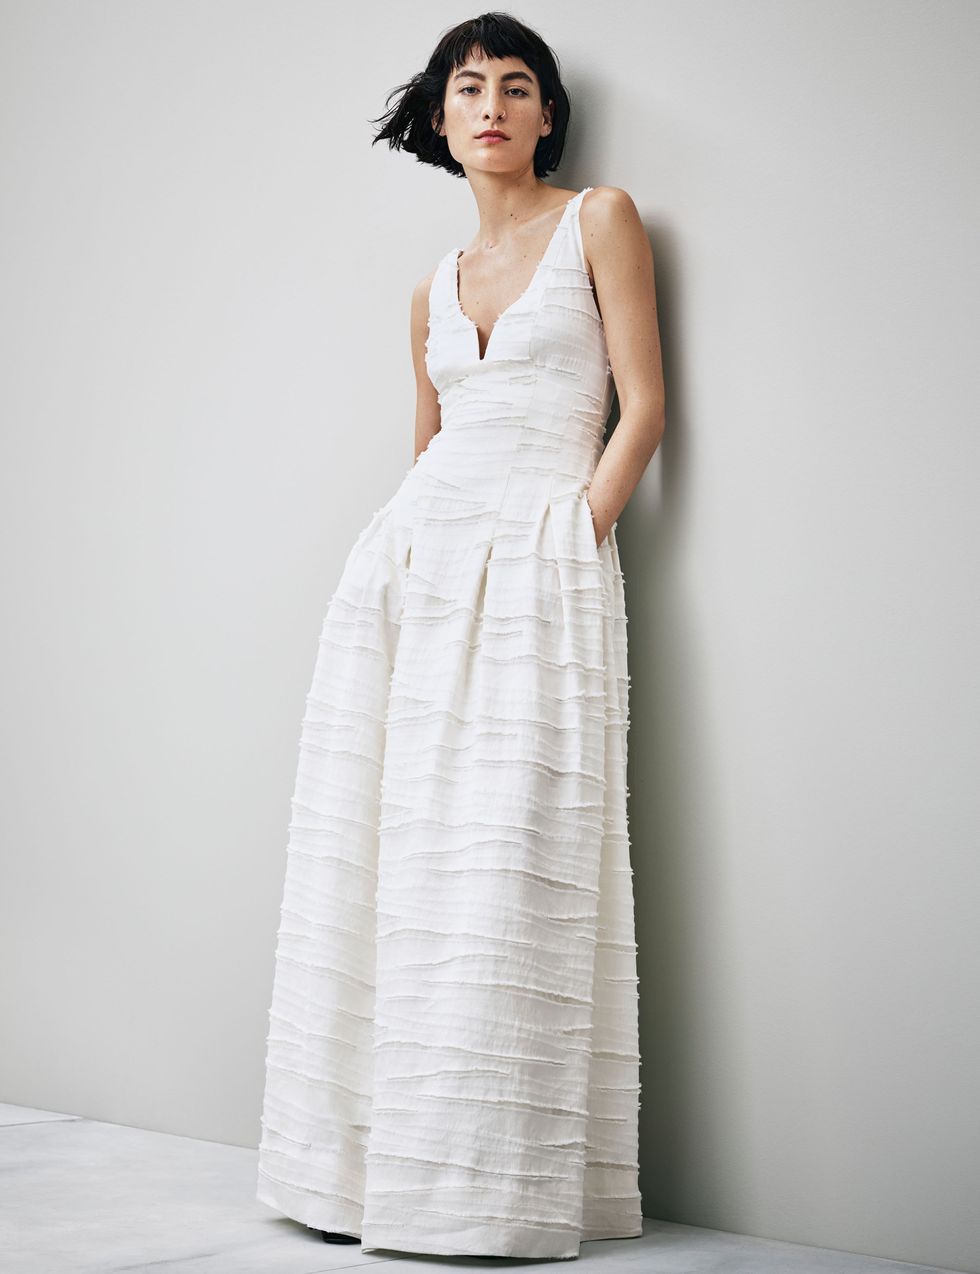 H&M Conscious Collection wedding dress